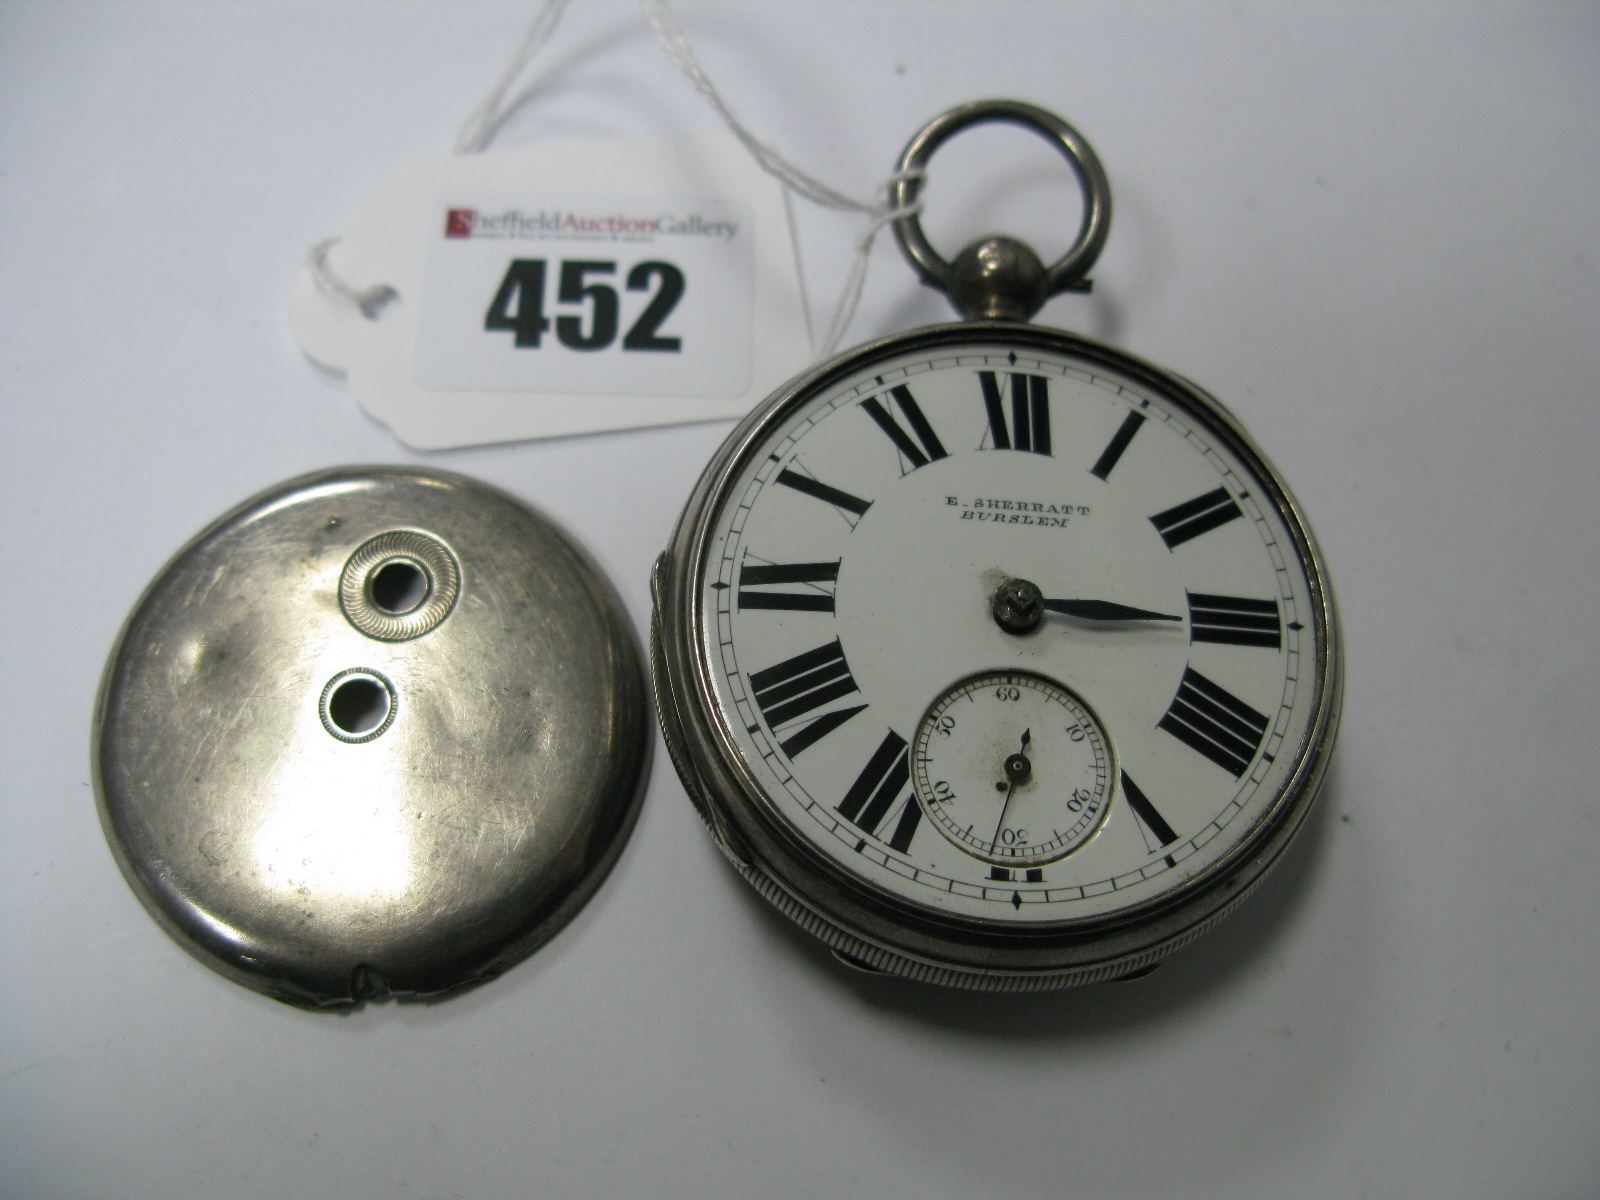 E Sherratt Burslem; A Hallmarked Silver Case Openface Pocketwatch, the signed dial with bold black